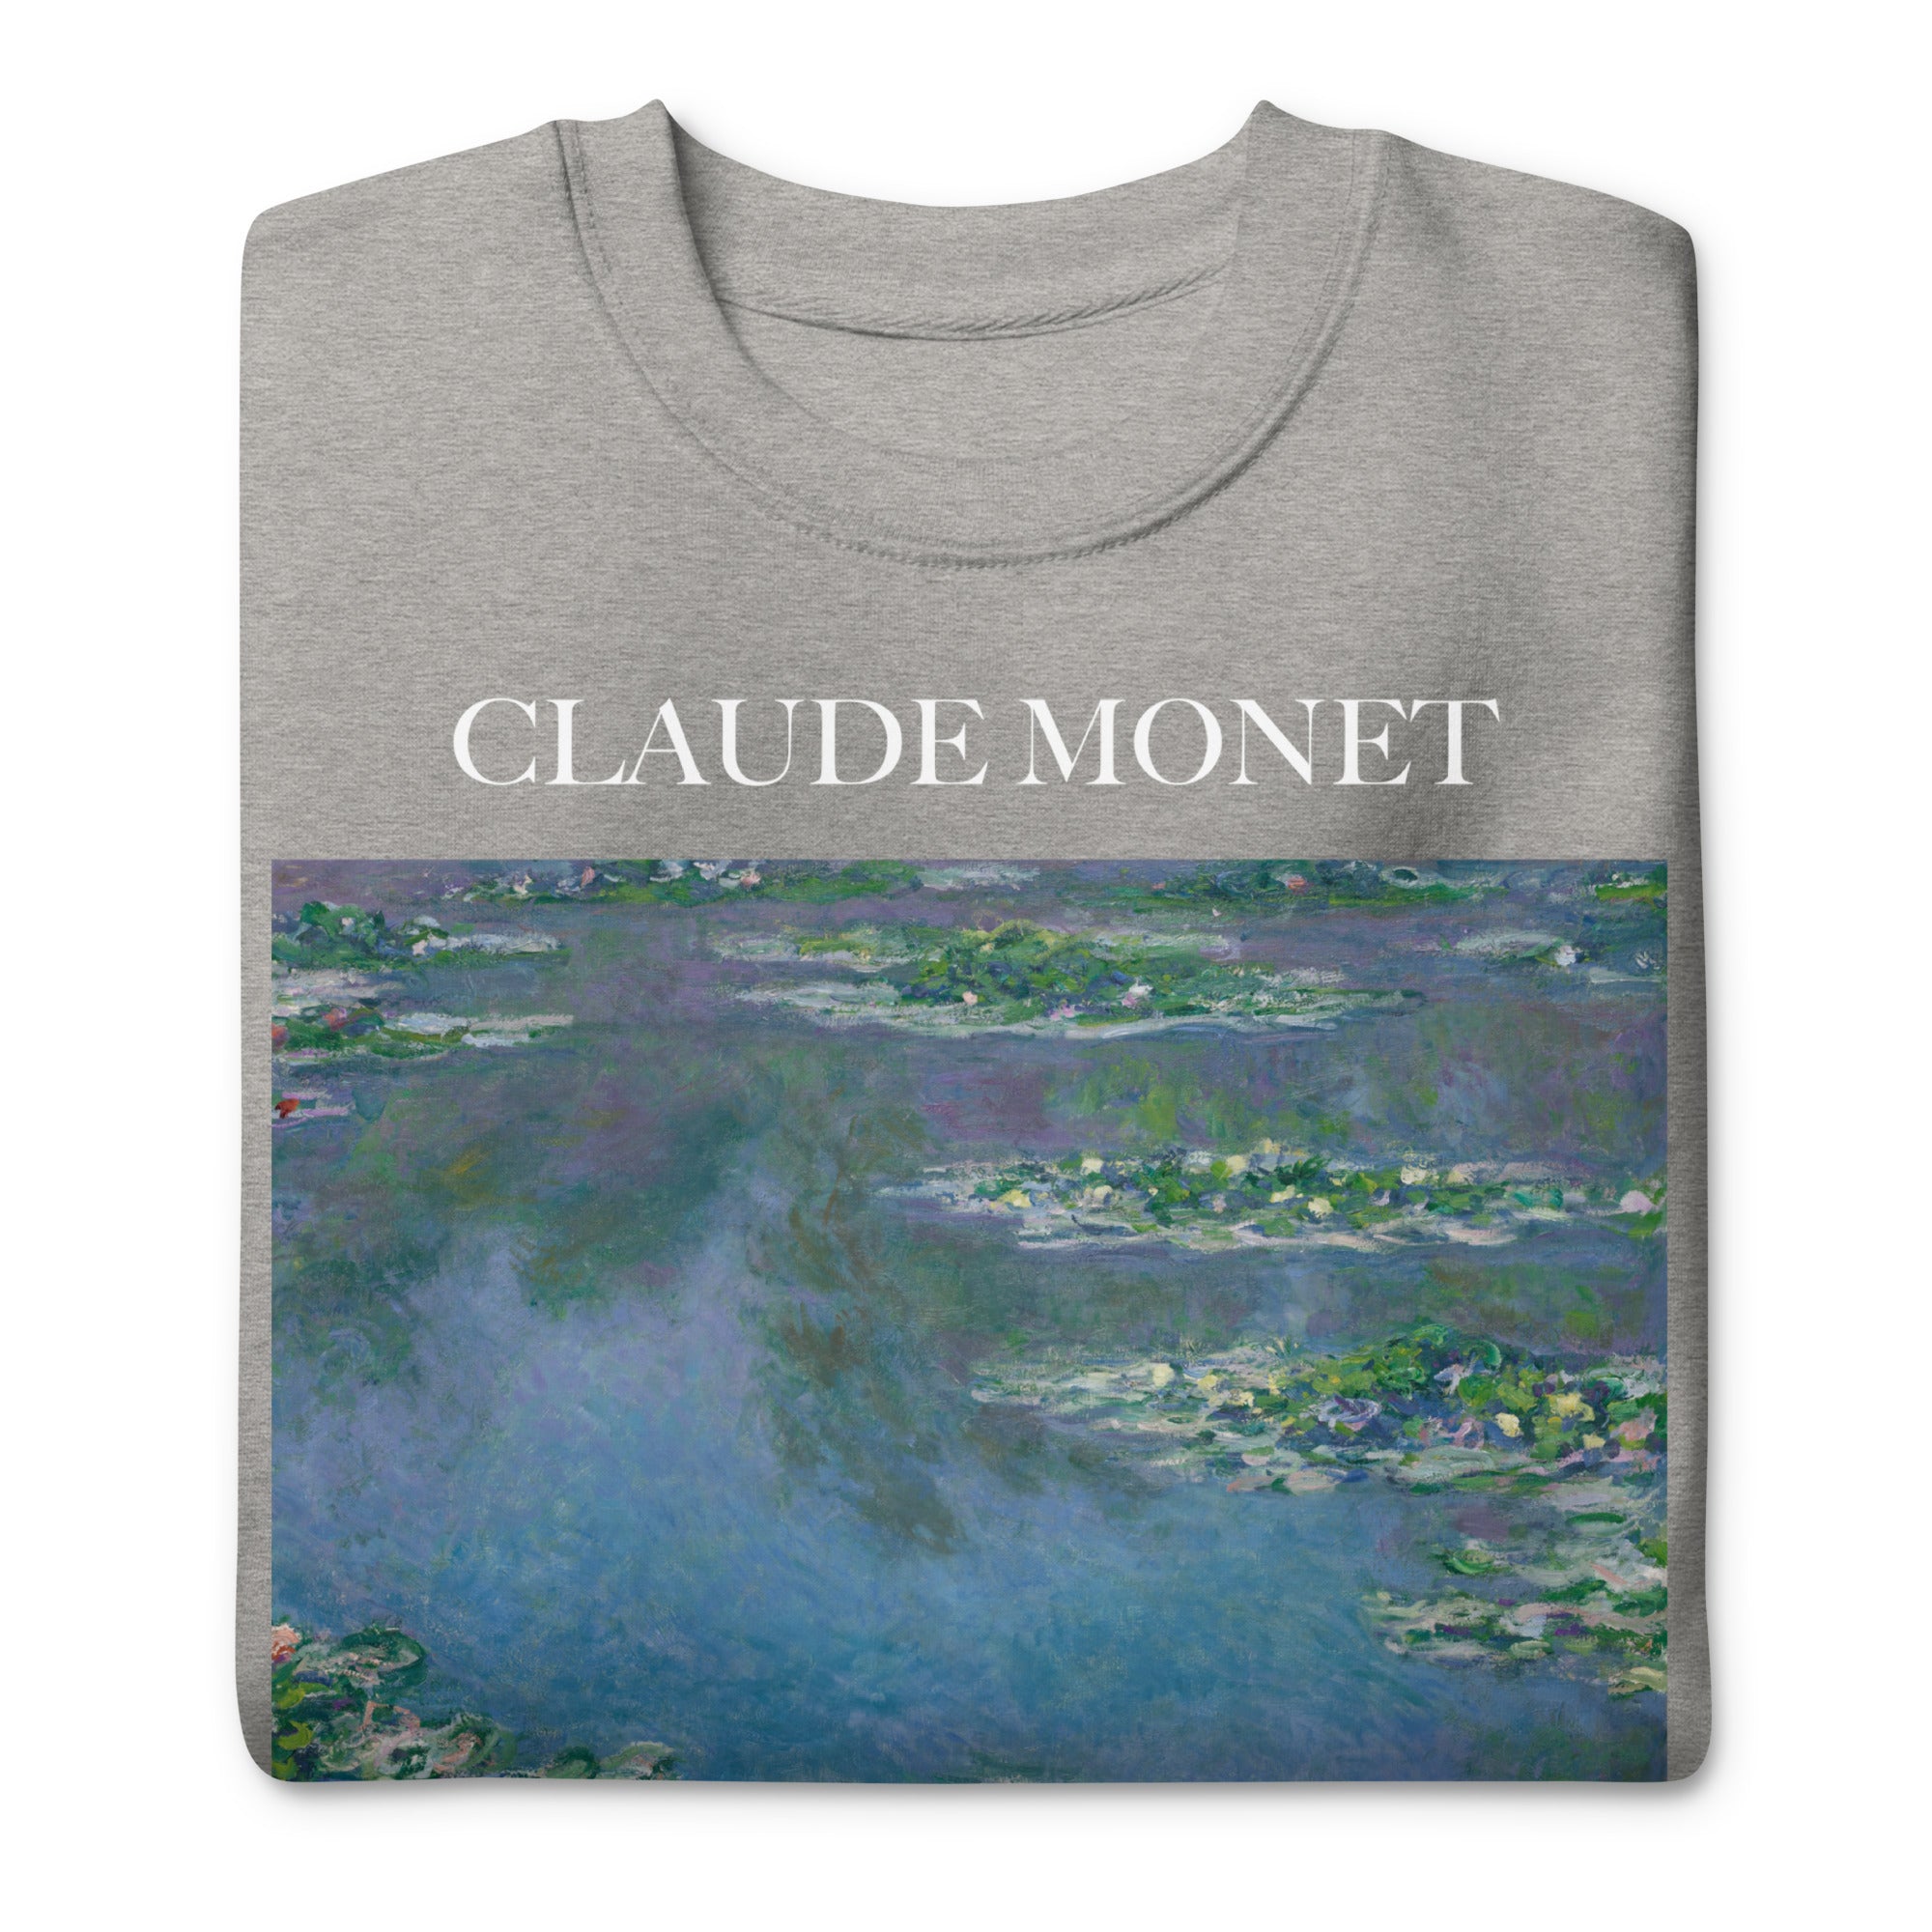 Claude Monet 'Water Lilies' Famous Painting Sweatshirt | Unisex Premium Sweatshirt